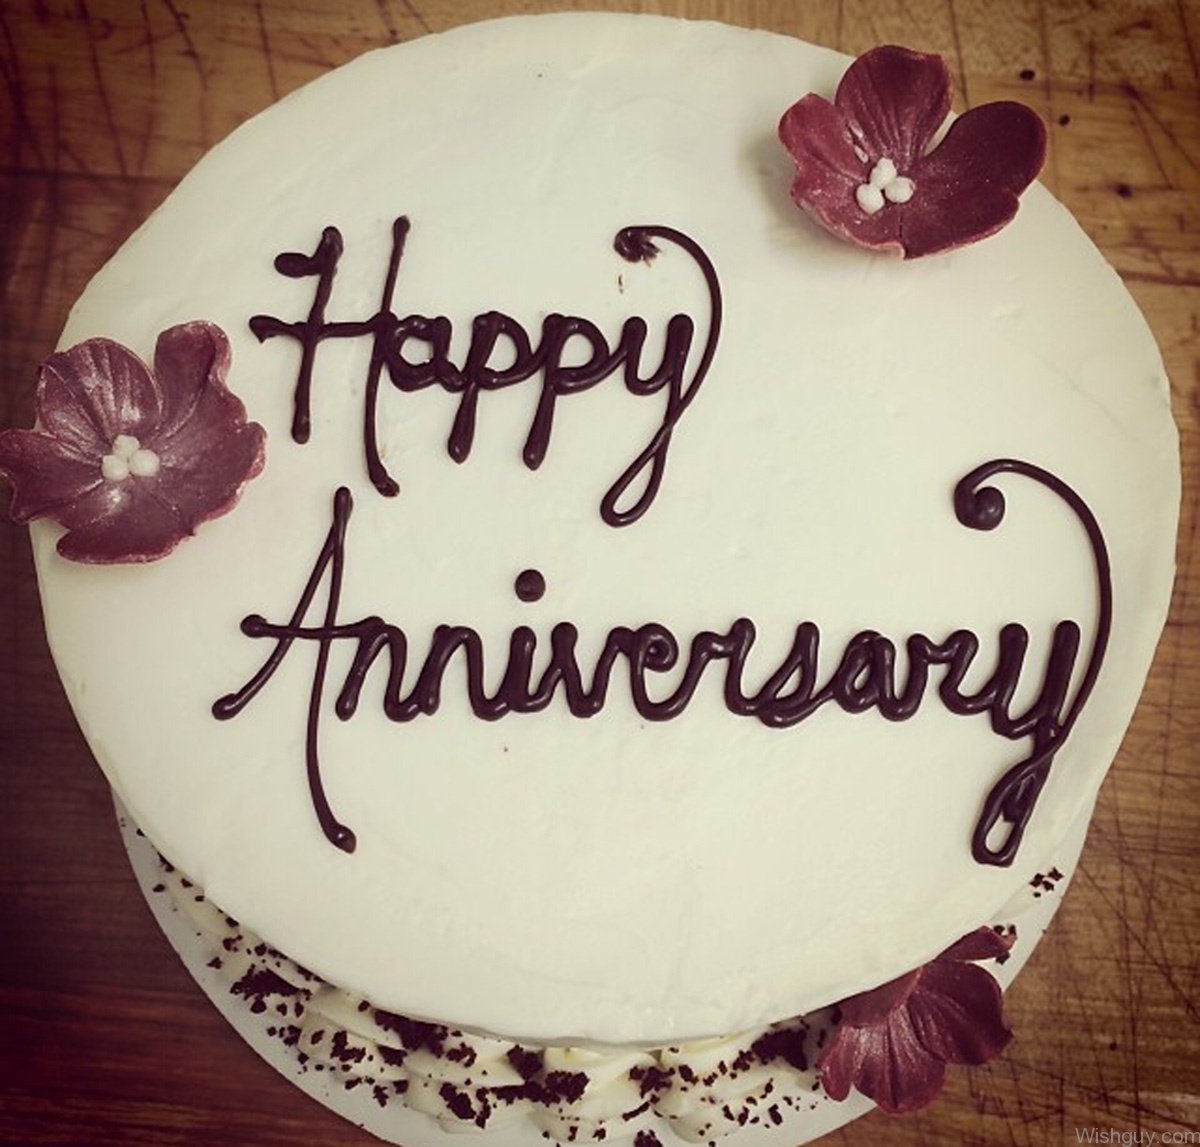 Happy Weeding Anniversary – Cake Image - Wishes, Greetings ...